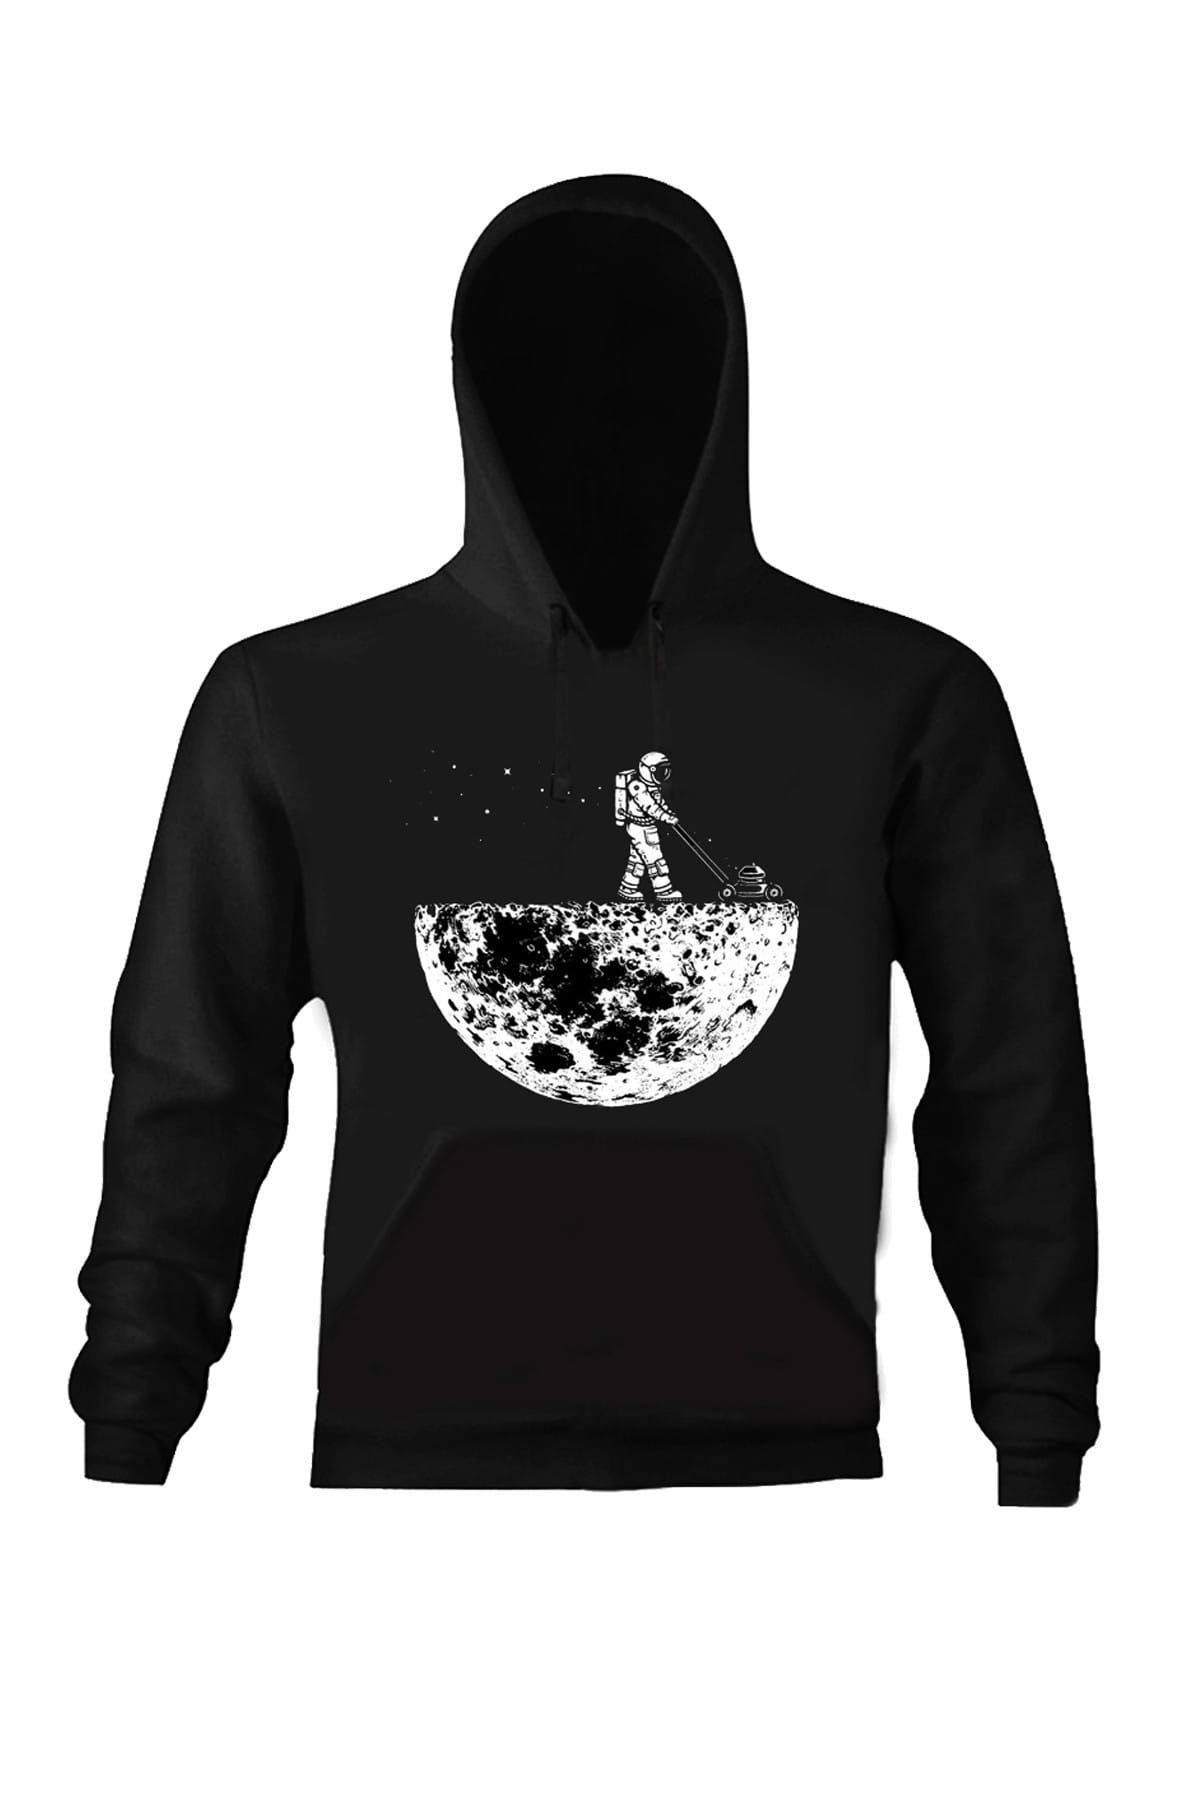 Art T-Shirt Gardener Astronaut Unisex Sweatshirt - ARTRND02564W